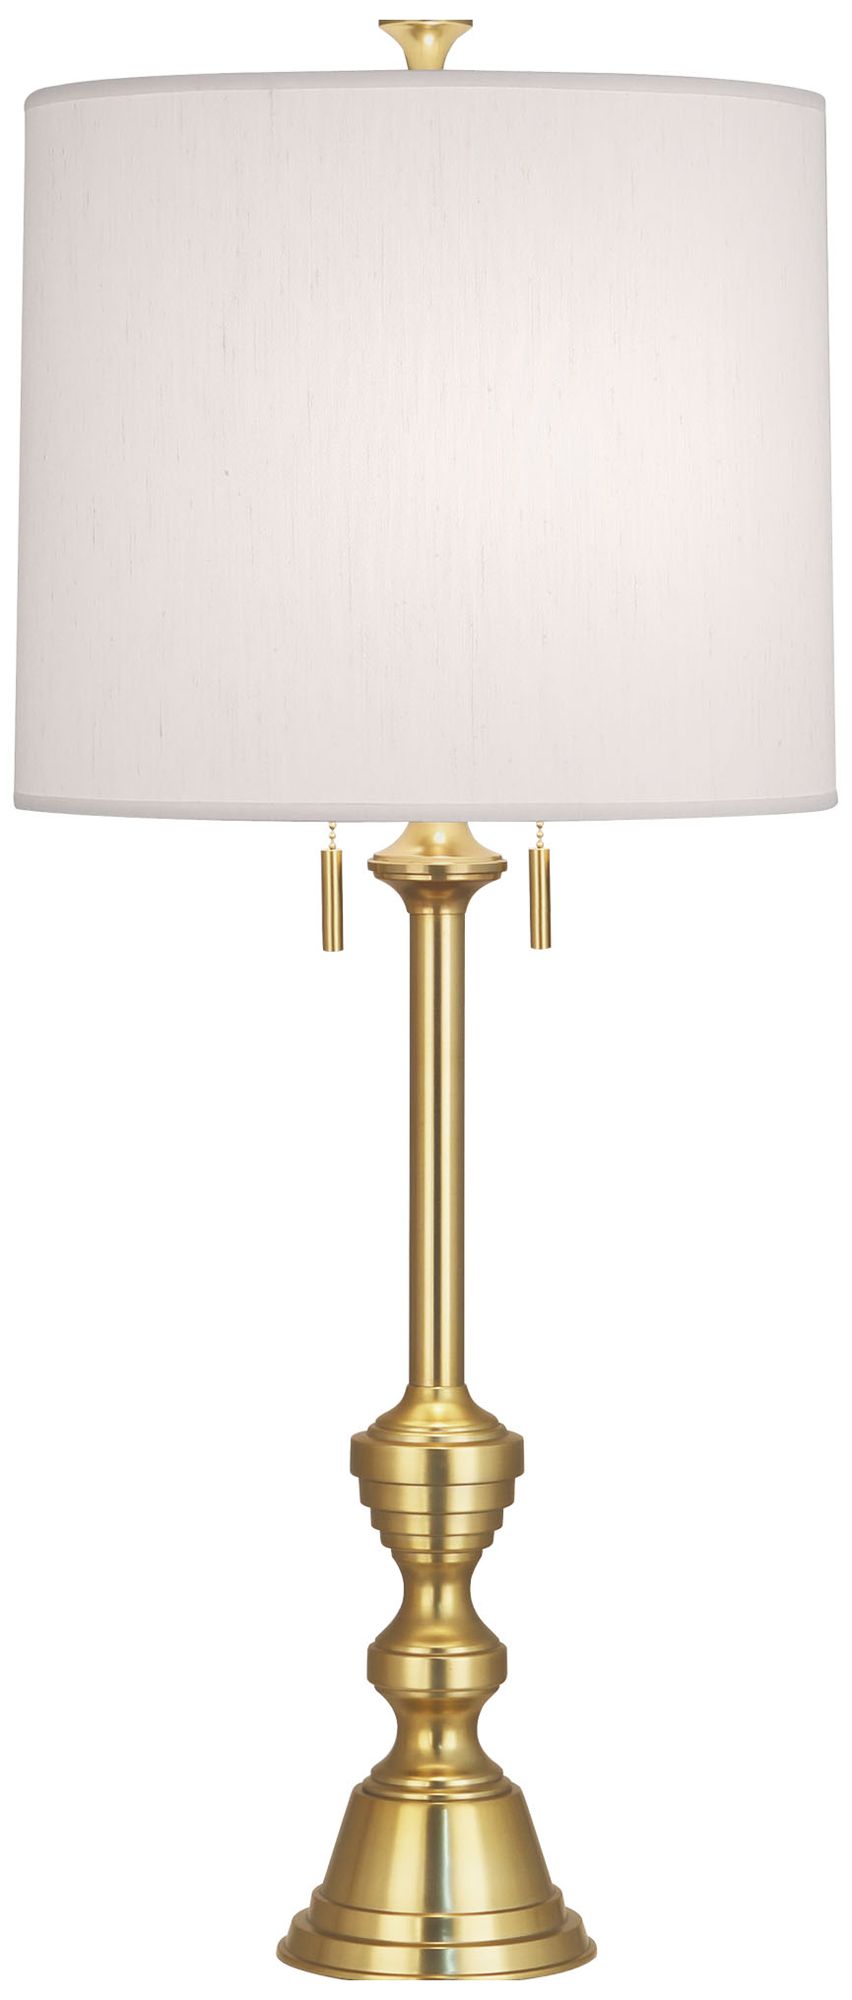 Robert Abbey Arthur Table Lamp Modern Brass Finish with Dupioni Shade